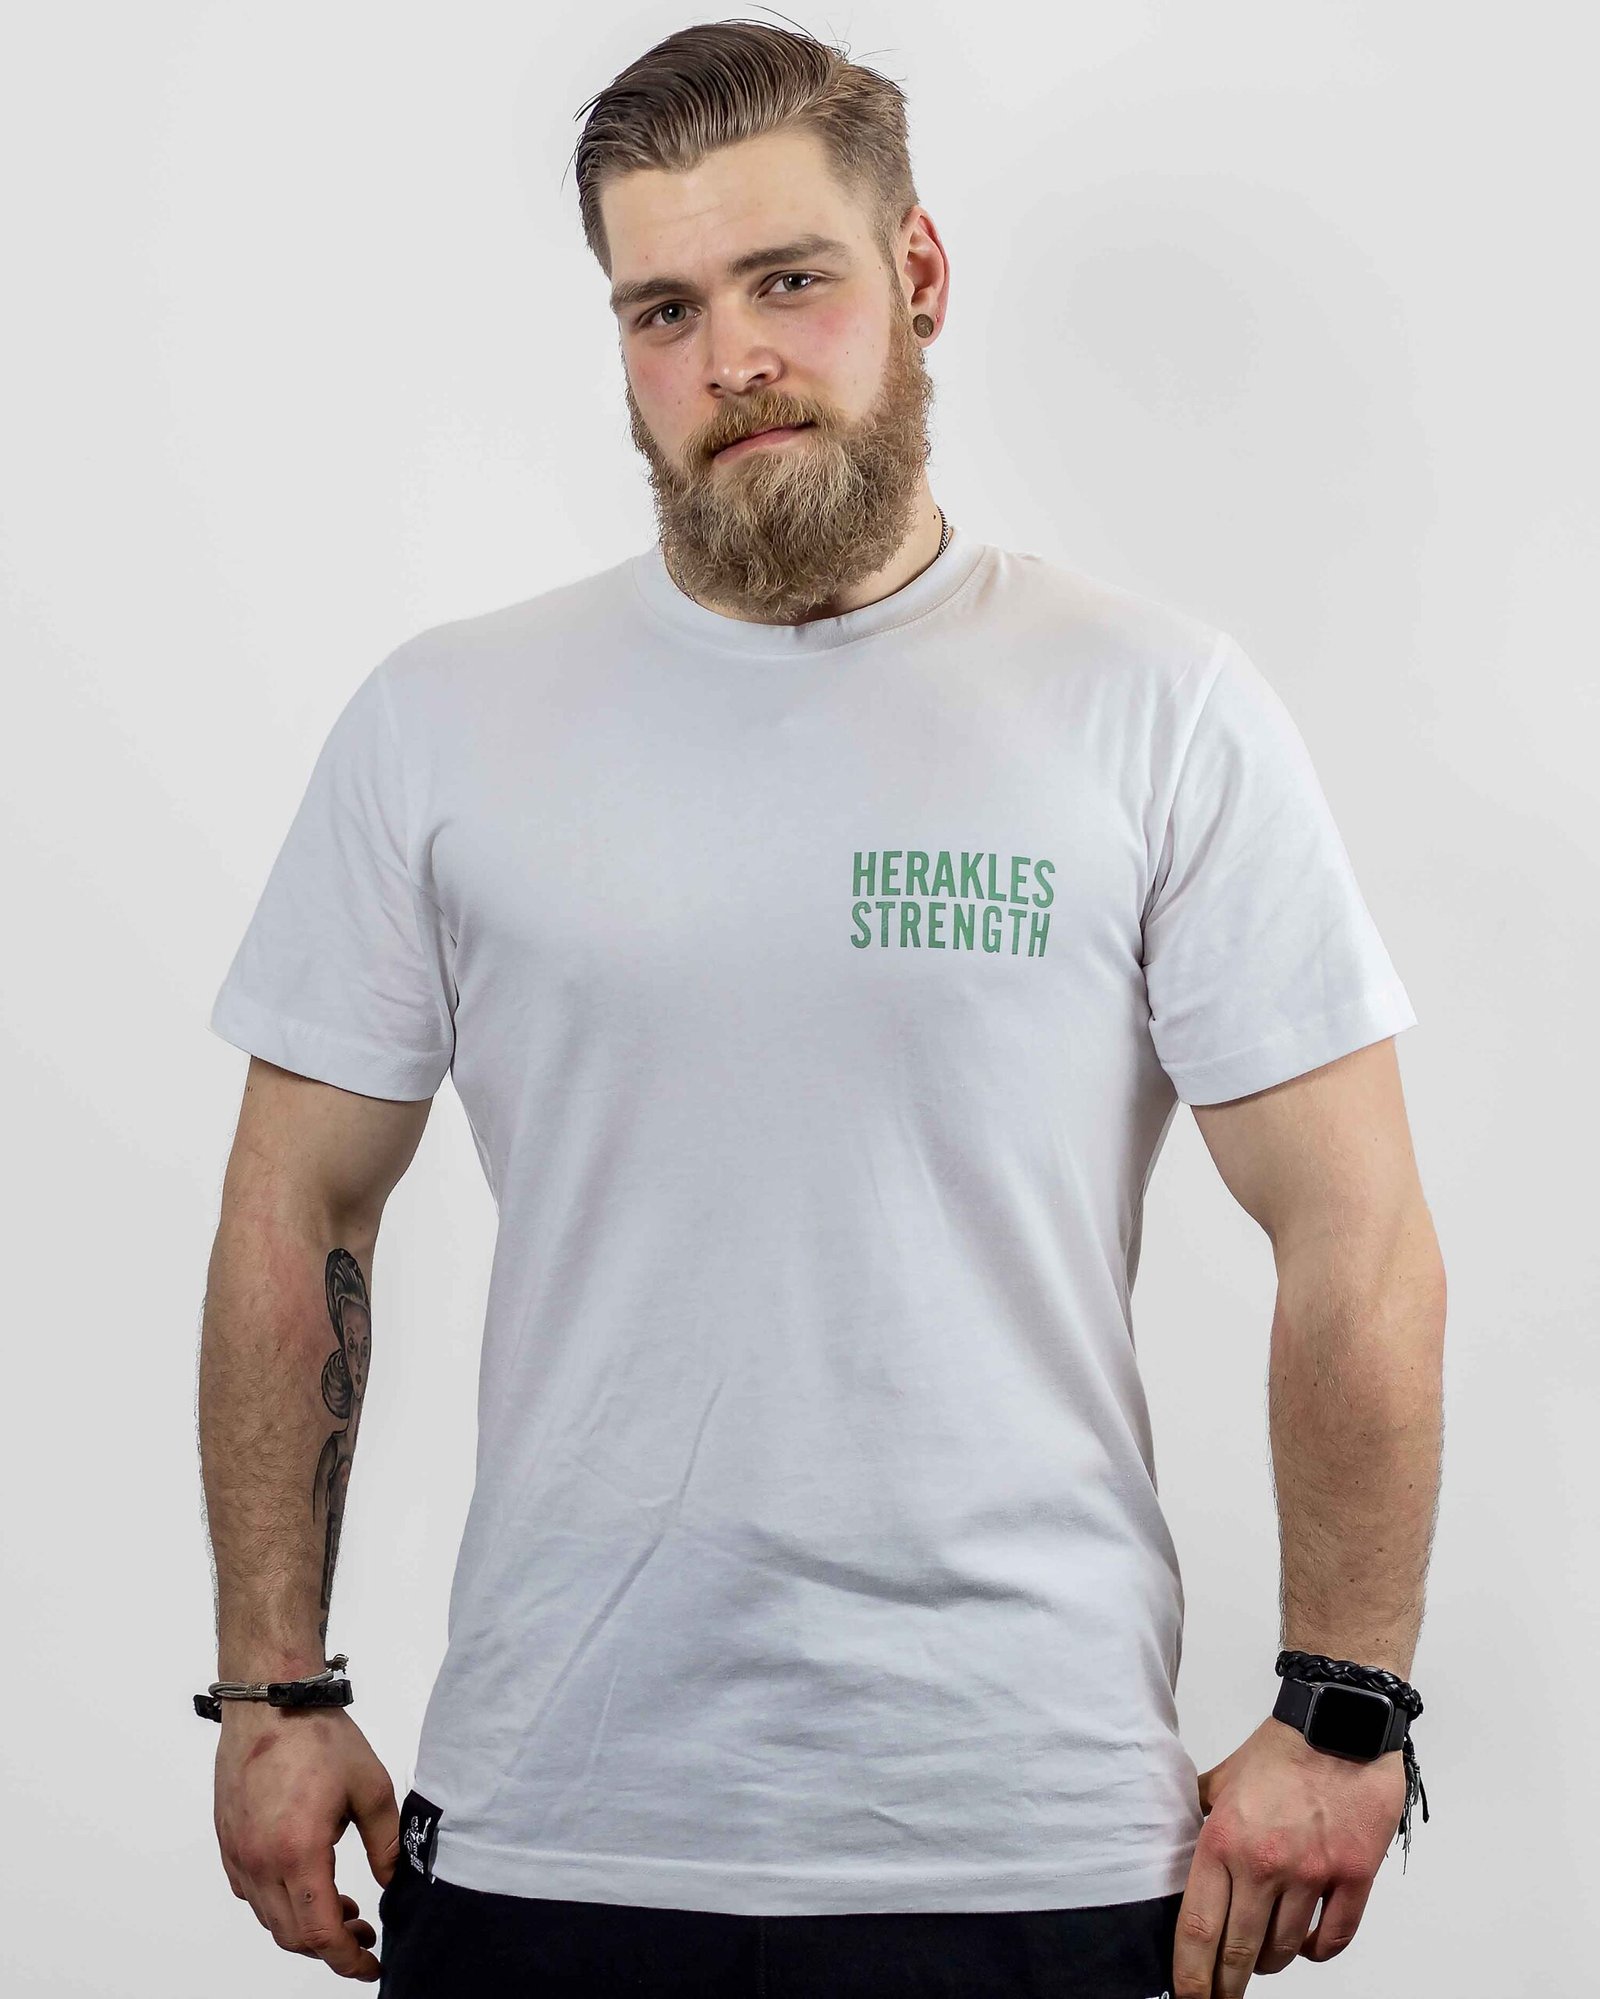 Herakles-Strength Olive On White Shirt